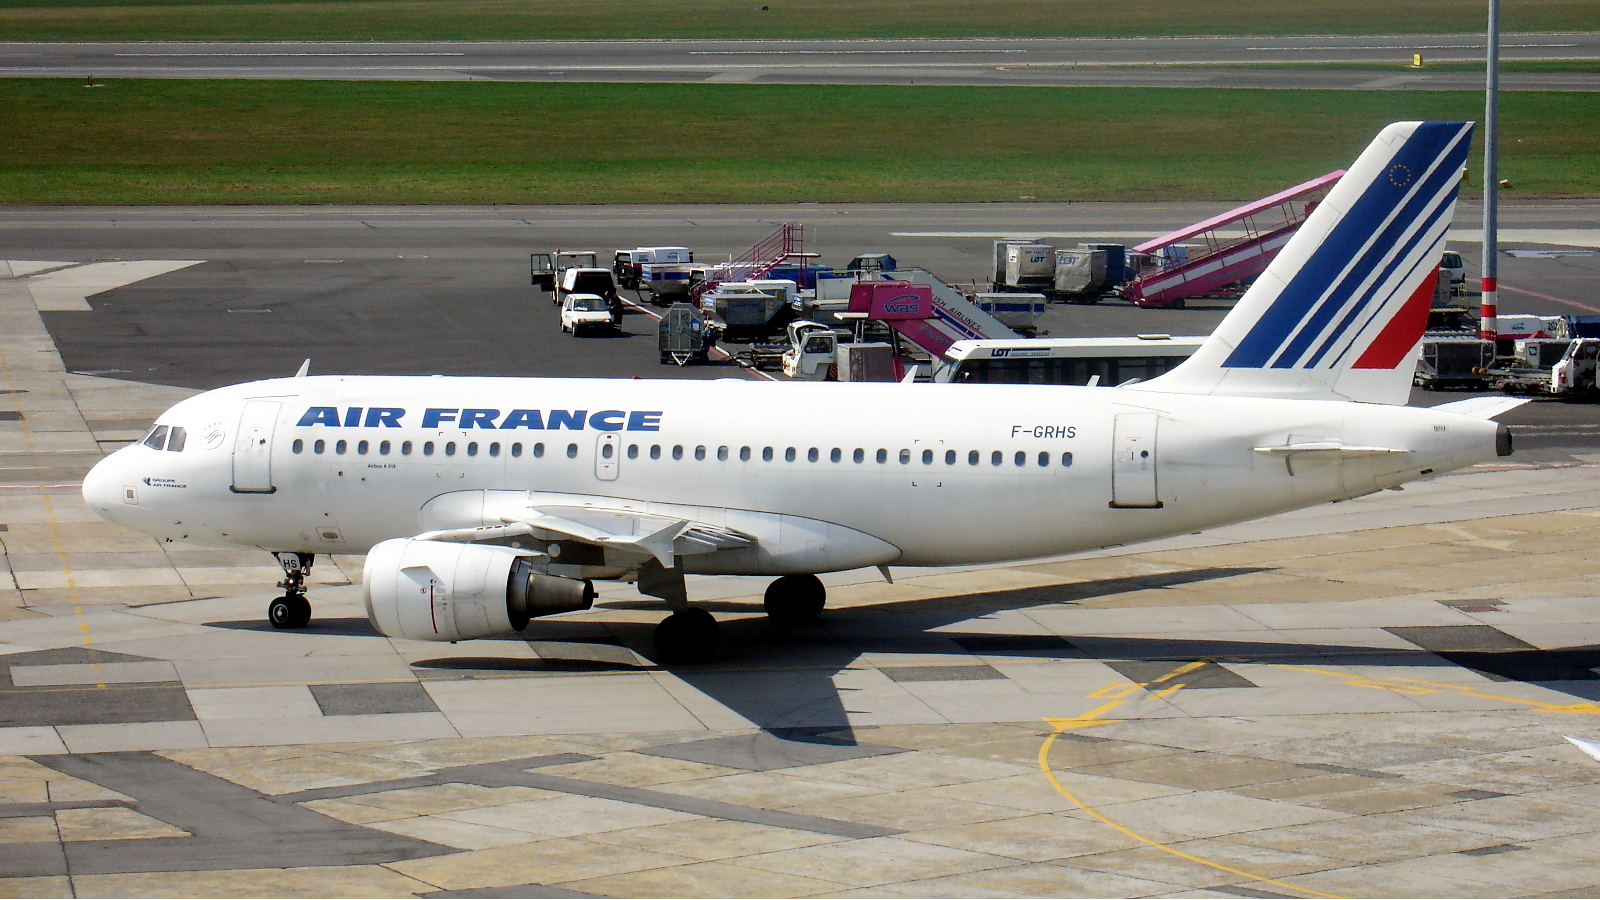 F-GRHS ✈ Air France Airbus A319-111 @ Warsaw-Chopin